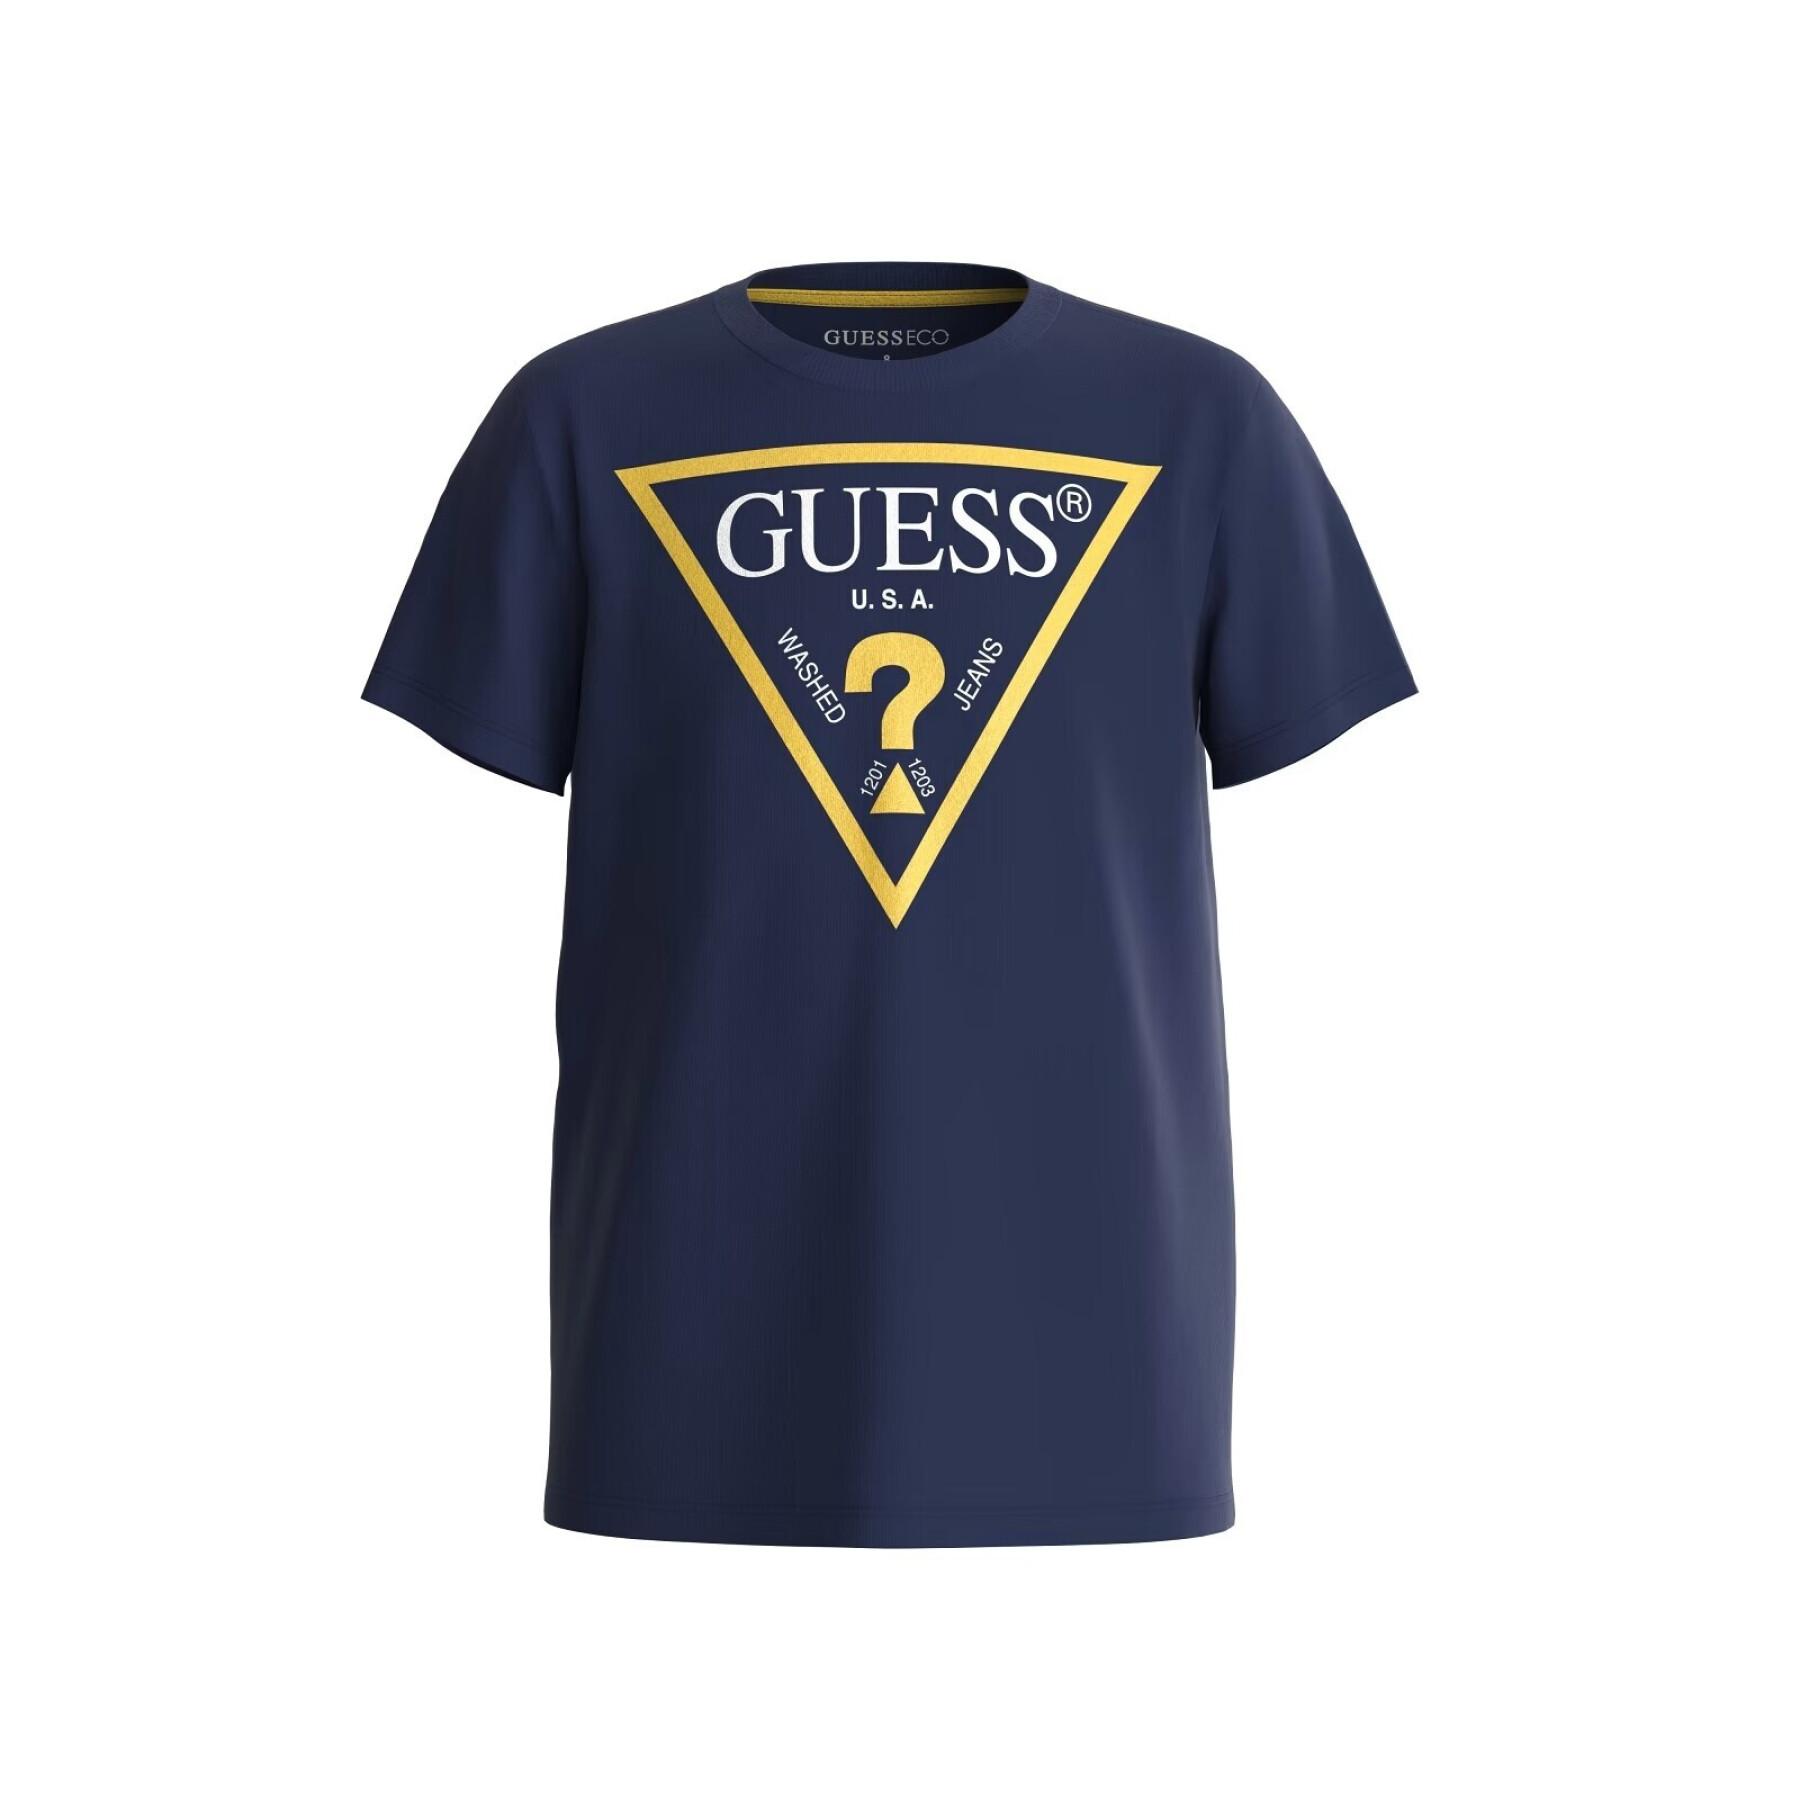 Child's T-shirt Guess Core